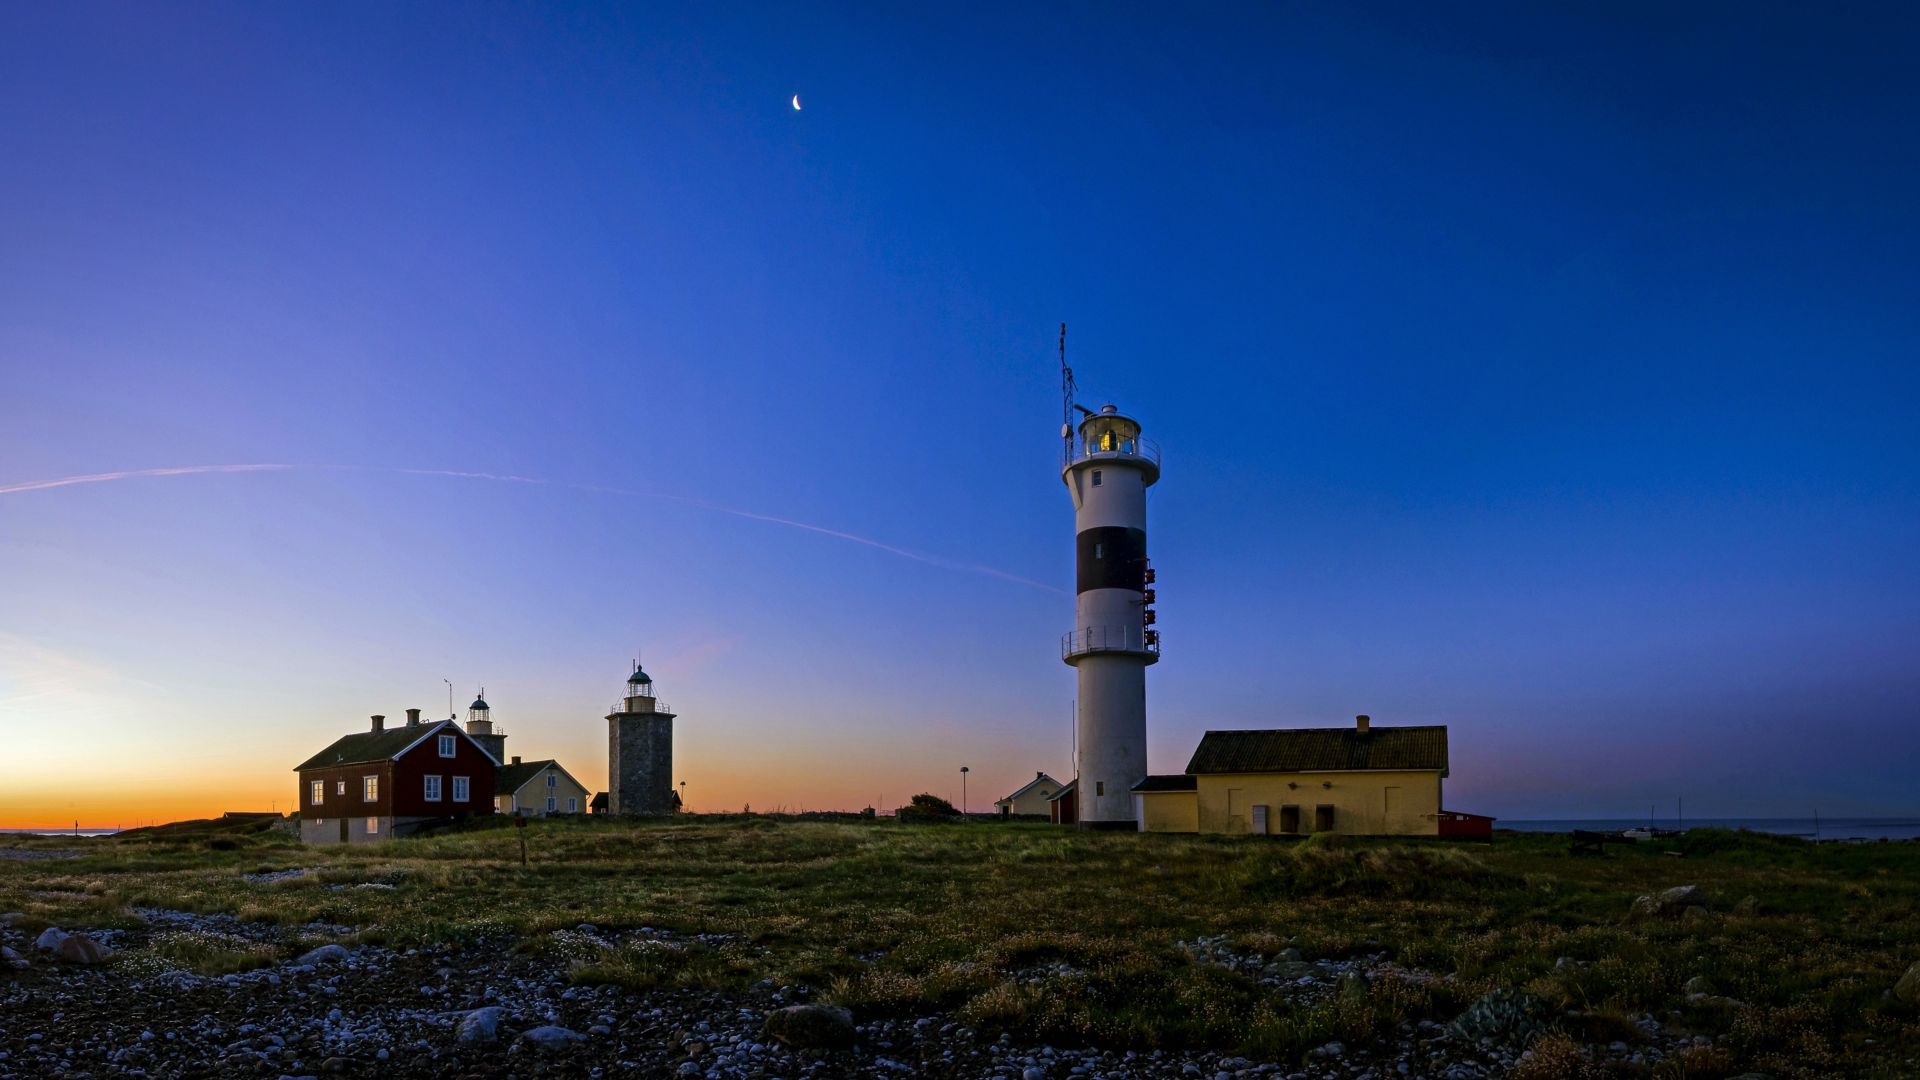 Lighthouse on the coast of Sweden at sundown